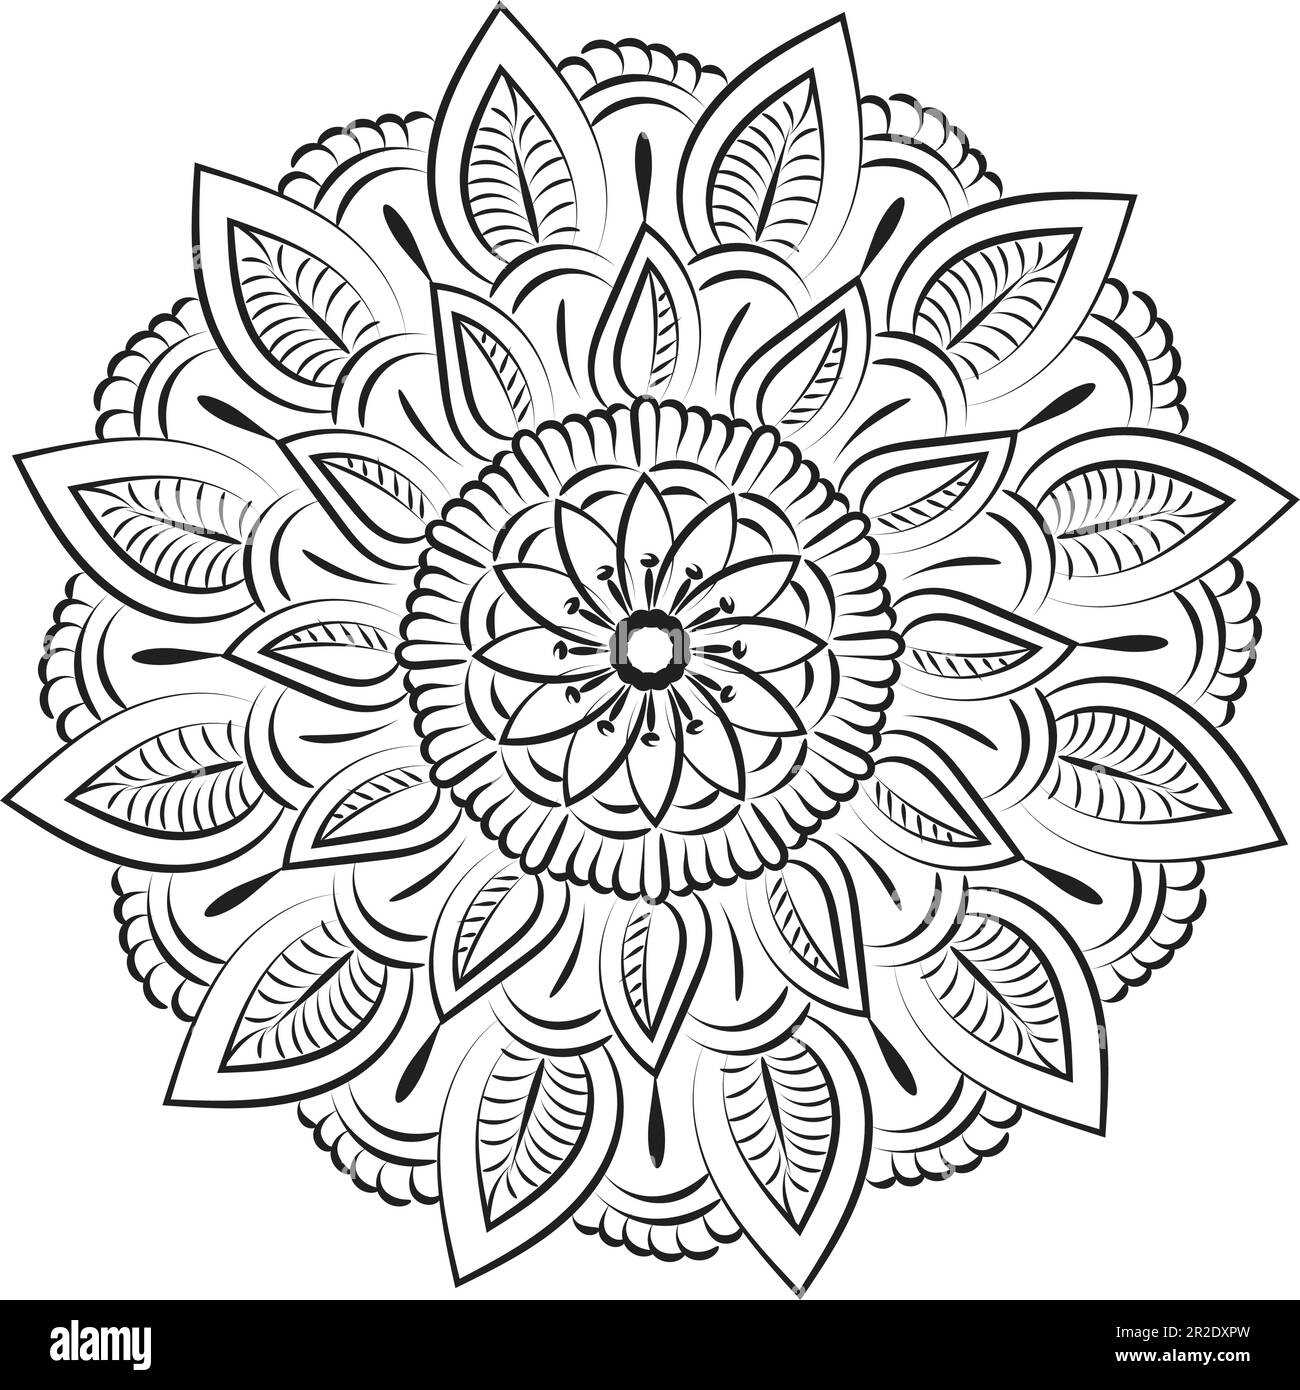 https://c8.alamy.com/comp/2R2DXPW/mandala-art-design-in-circle-simple-mandala-design-floral-mandala-art-beautiful-mandala-artwork-2R2DXPW.jpg